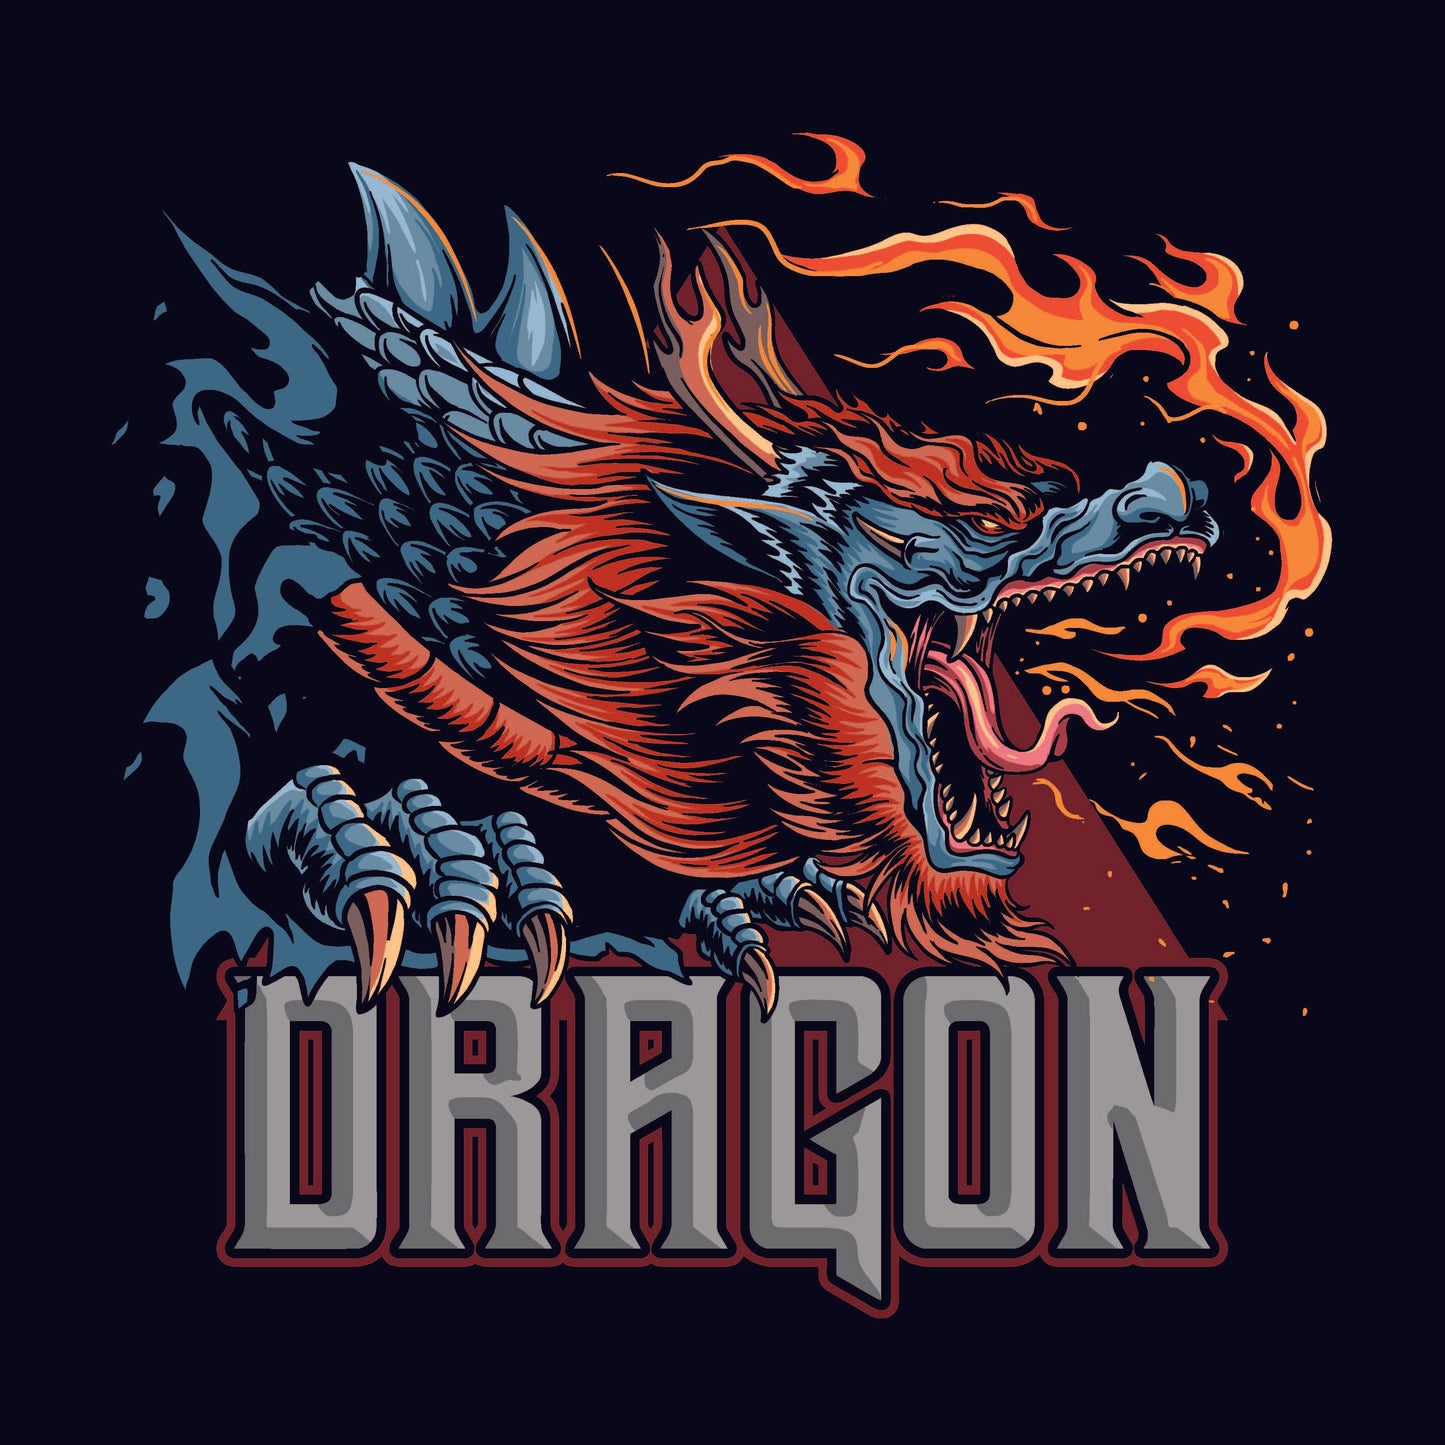 Fire-Breathing Dragon